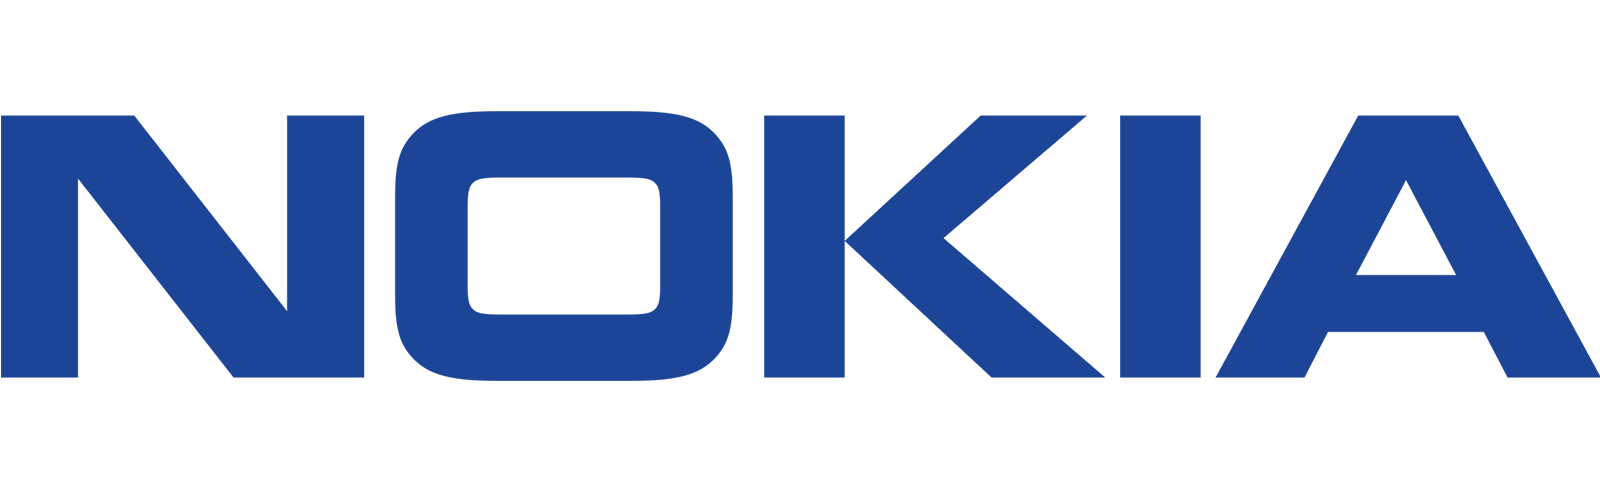 Nokia Corporation Logo - The Gadget Database: Nokia Oyj